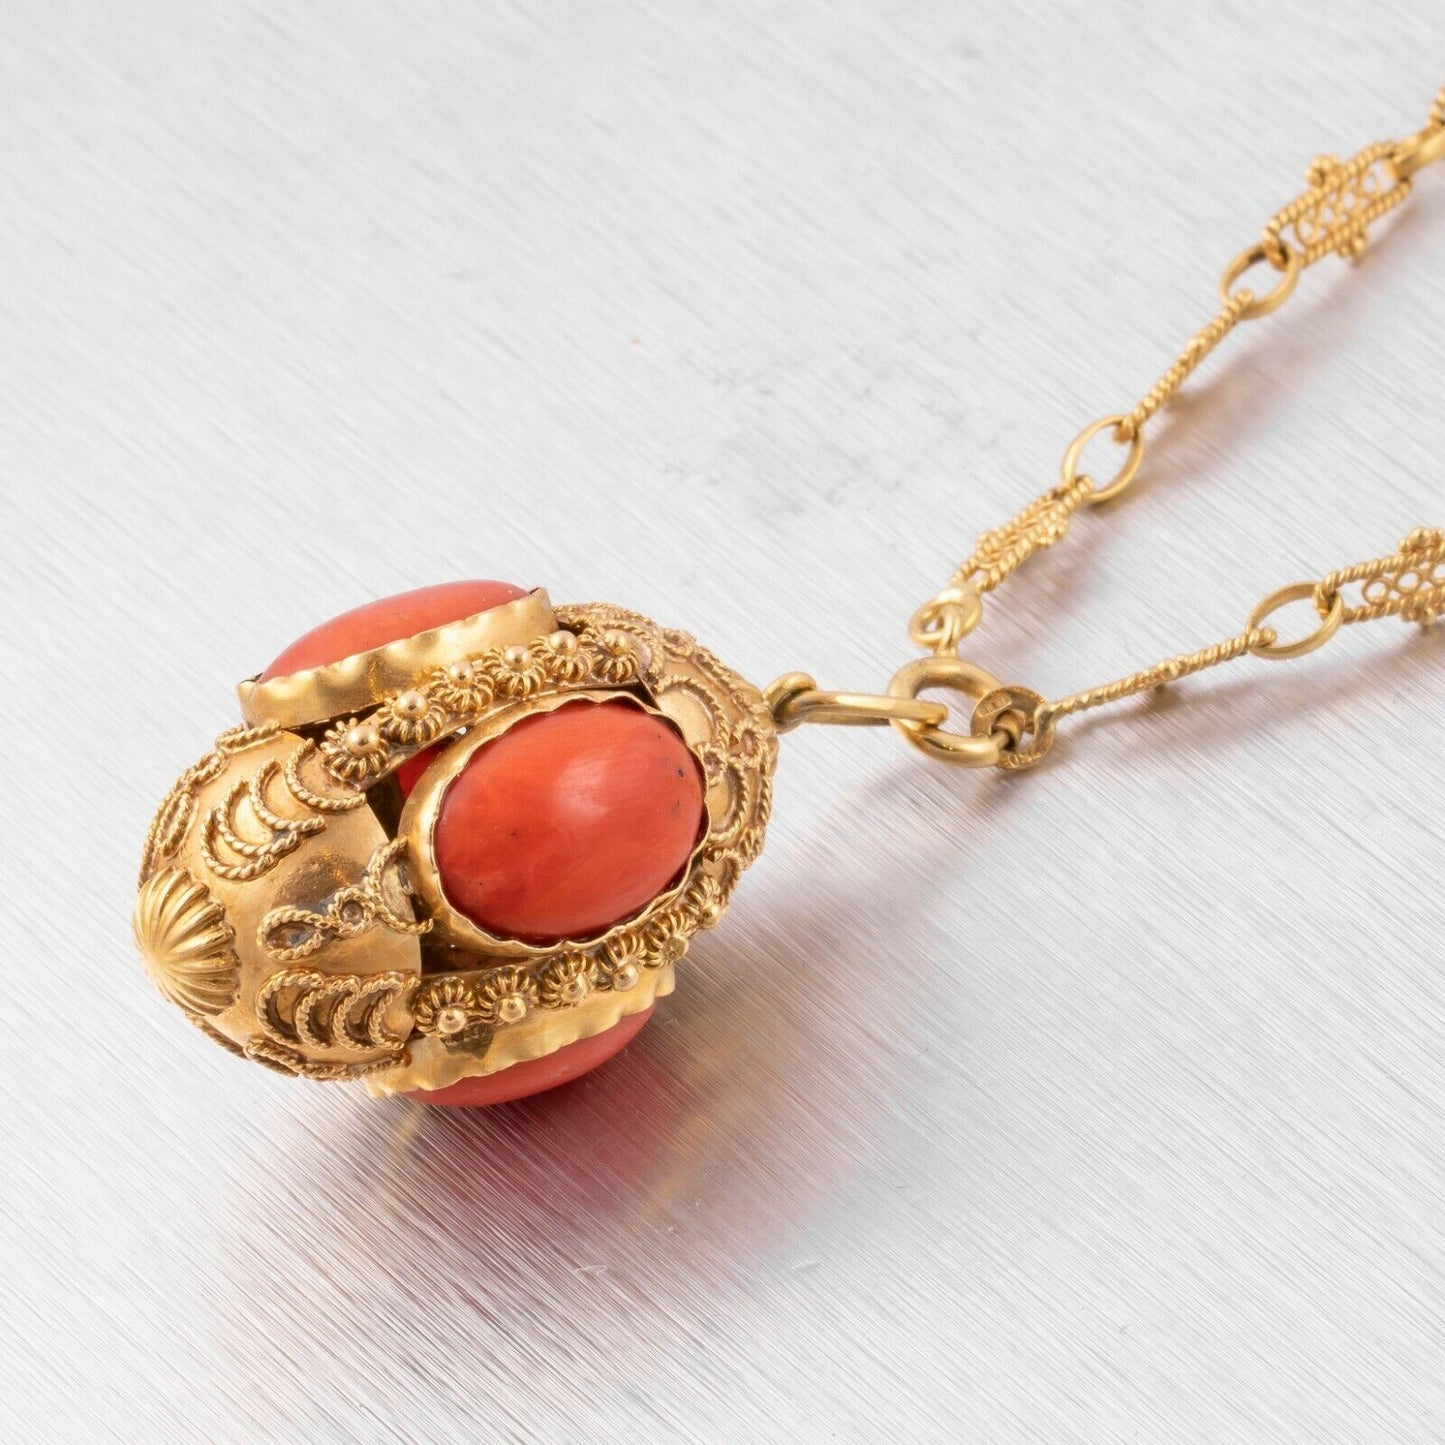 Antique Victorian Etruscan Revival 18k Yellow Gold Coral Pendant Necklace 36.5"